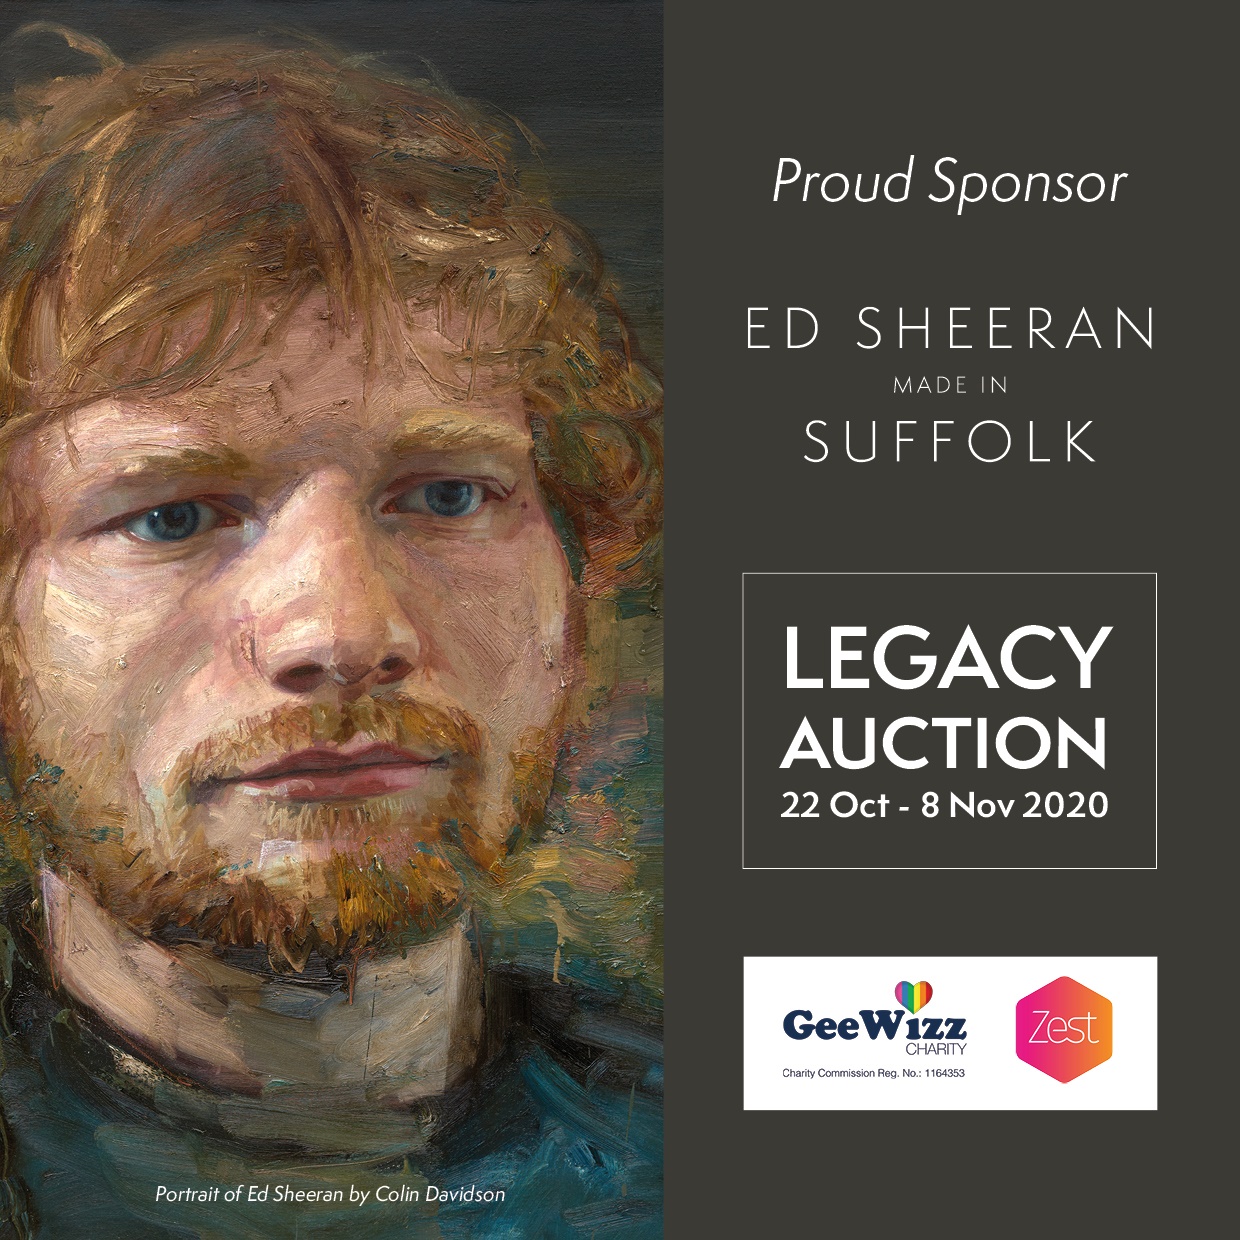 Ed Sheeran Made in Suffolk Global Legacy Auction